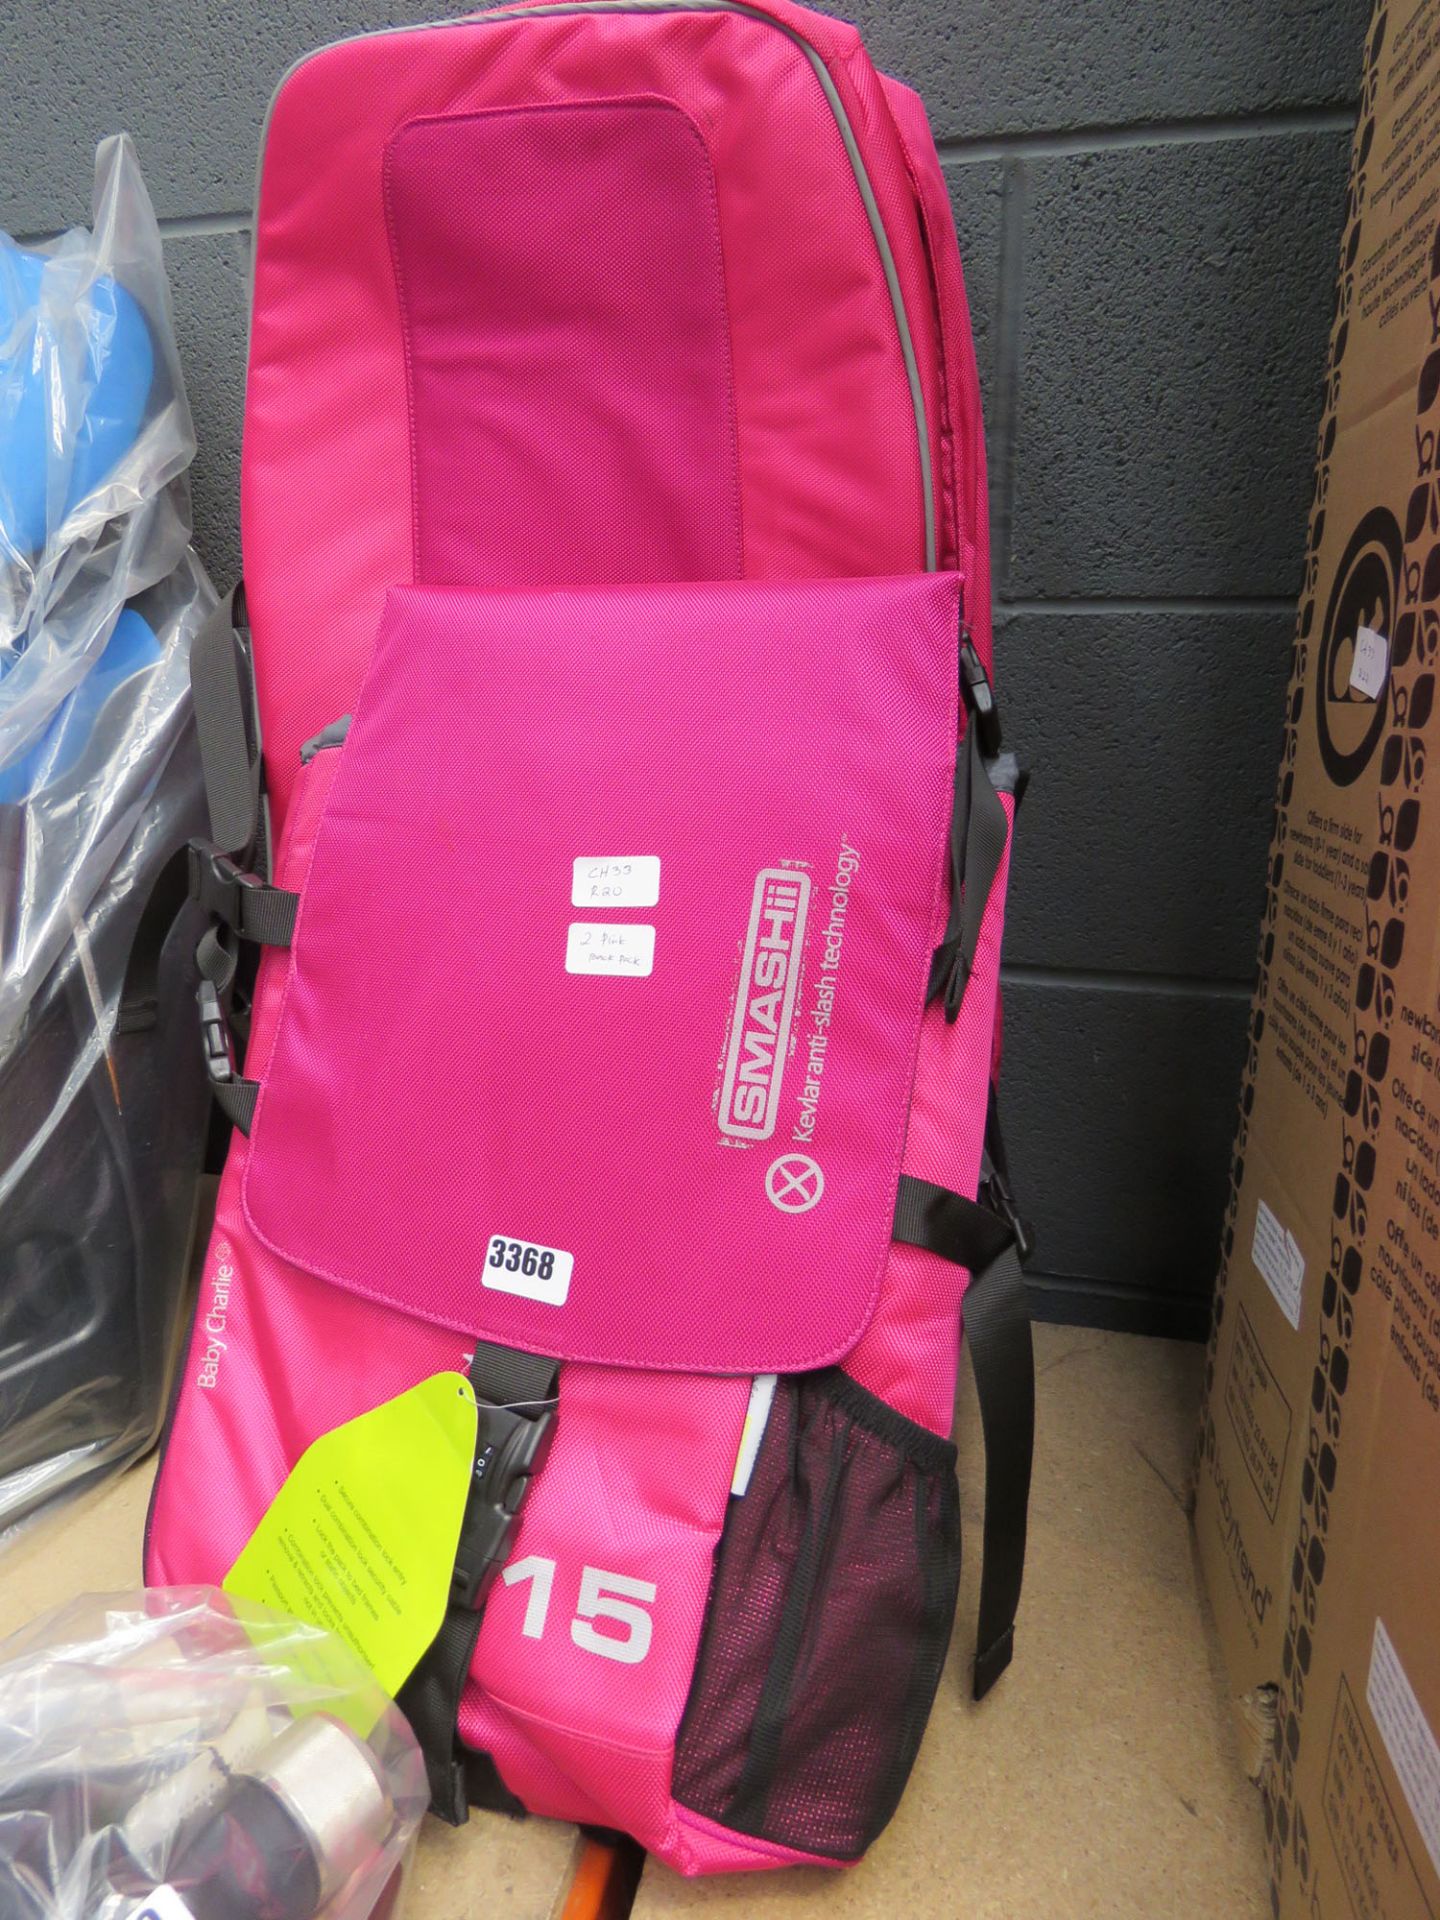 2 pink backpacks